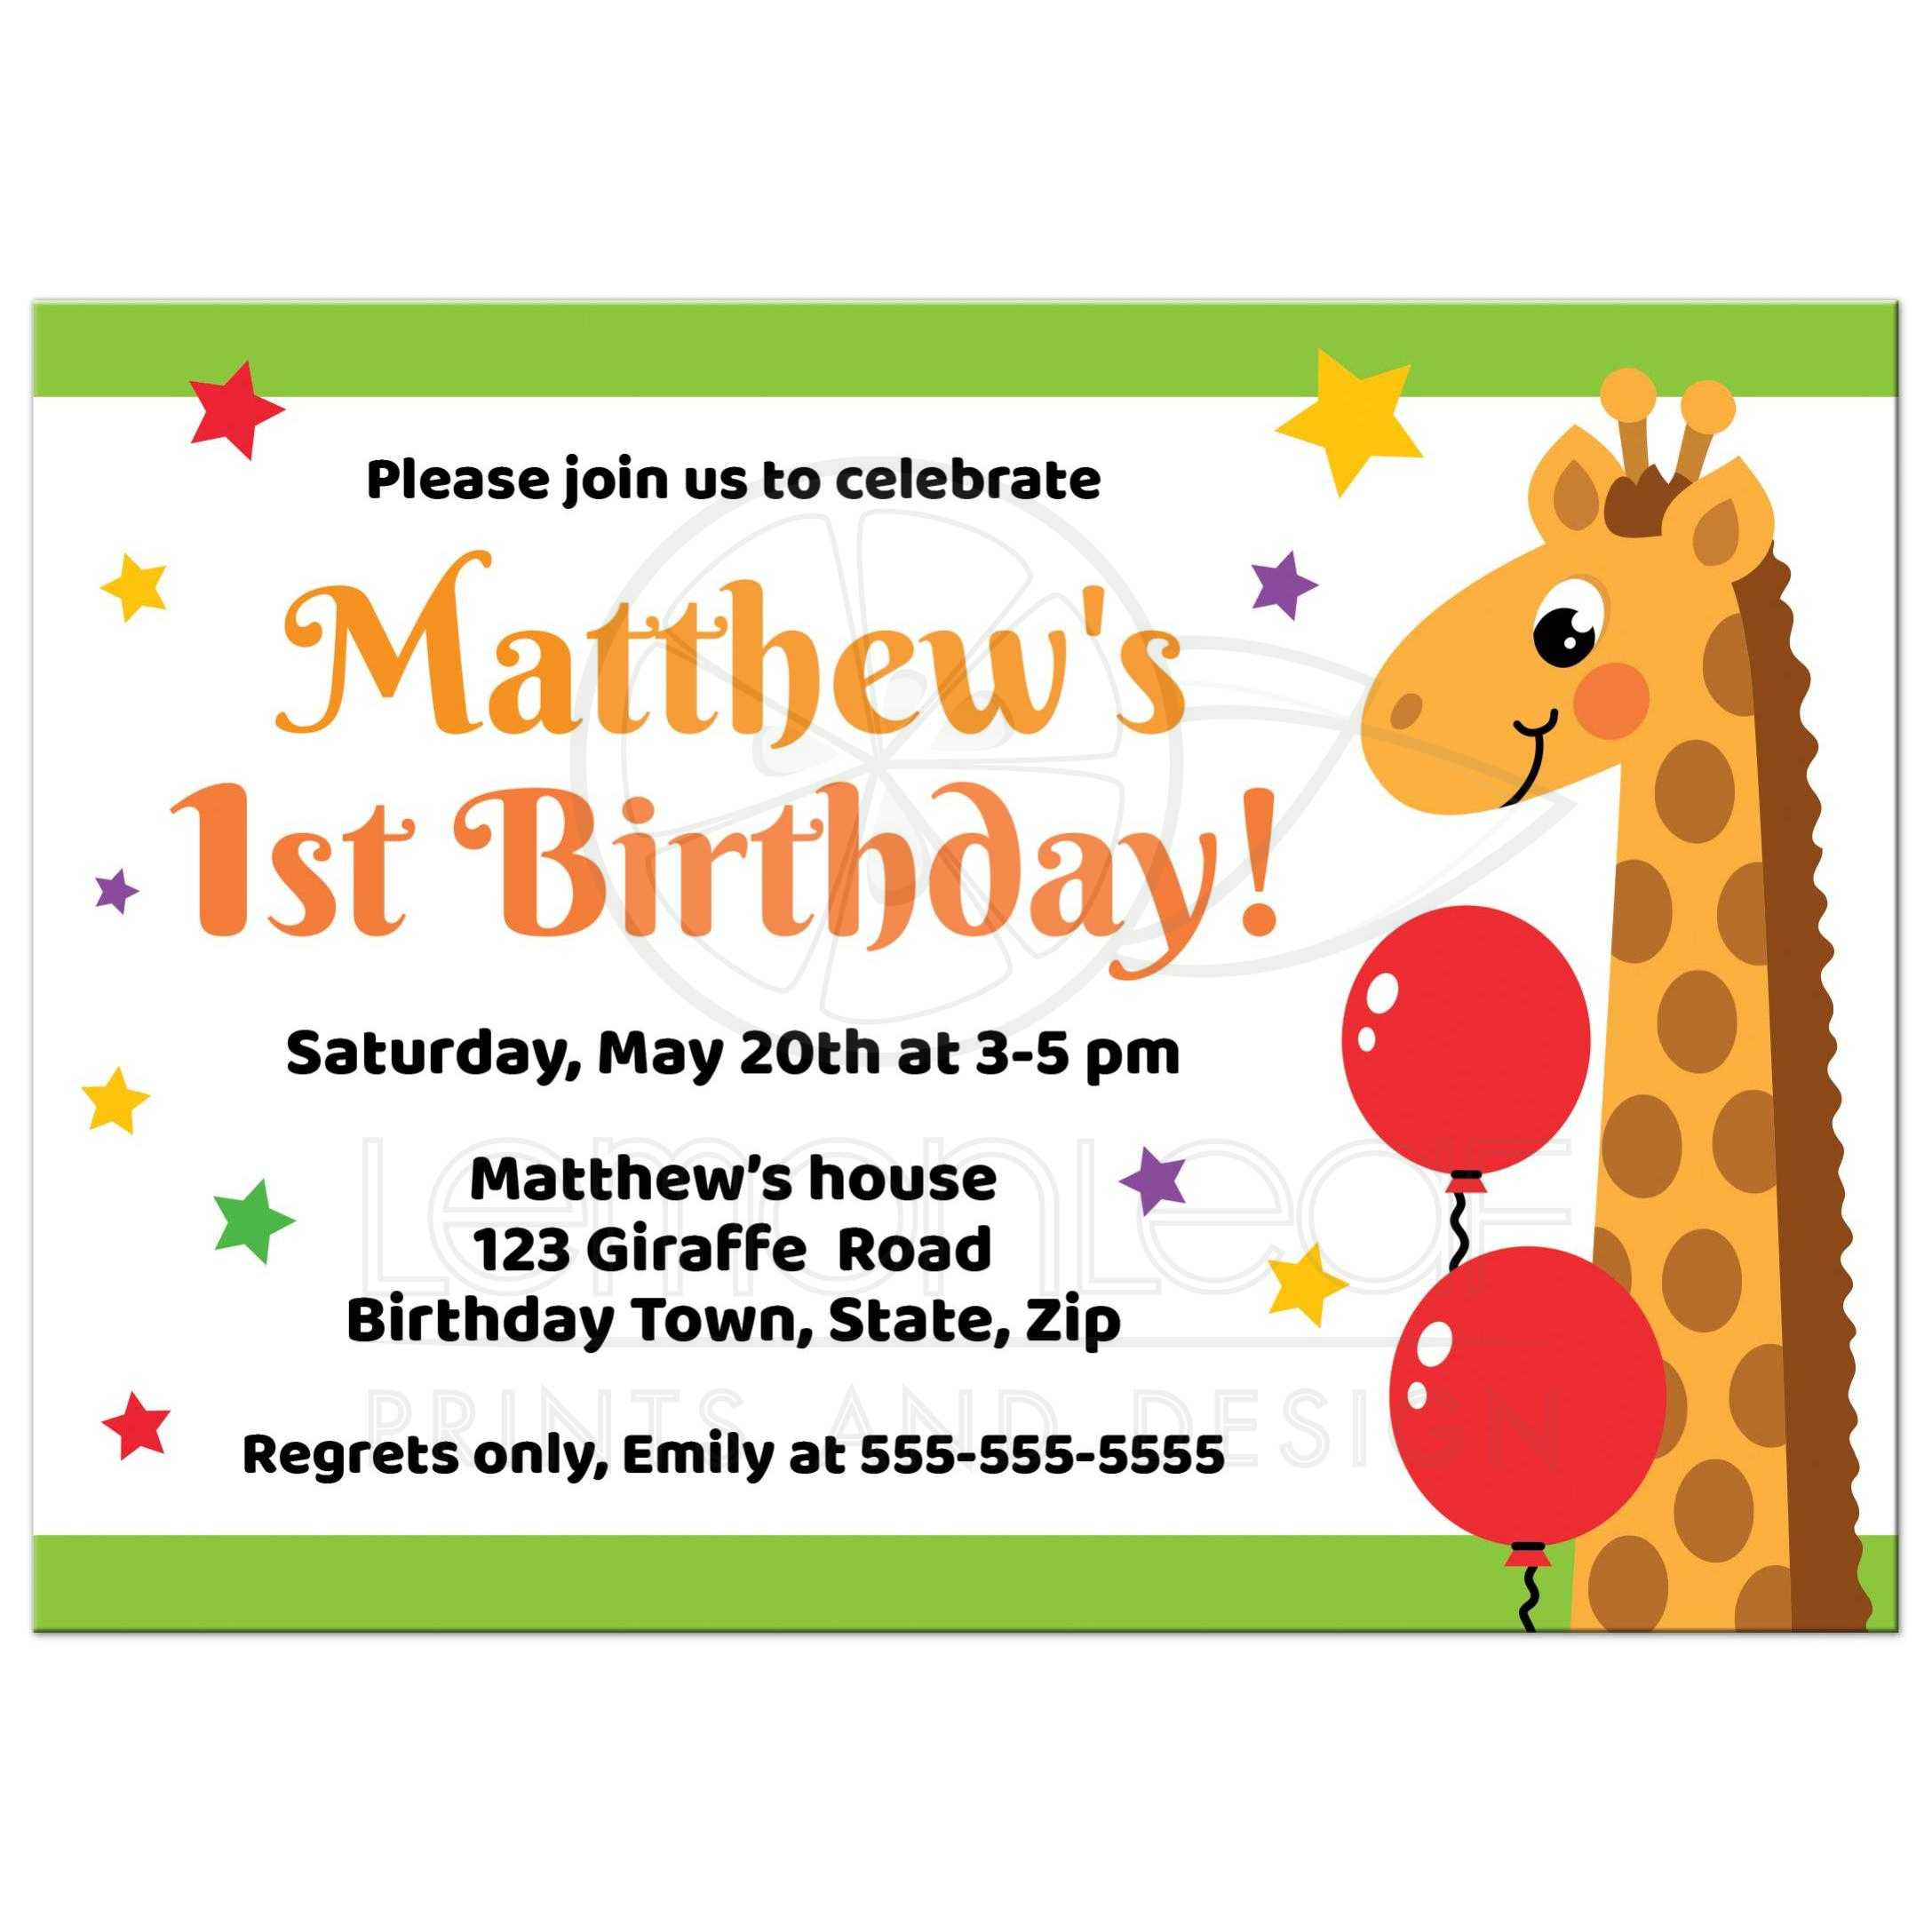 Giraffe Birthday Invitations
 Giraffe birthday party invitations for kids